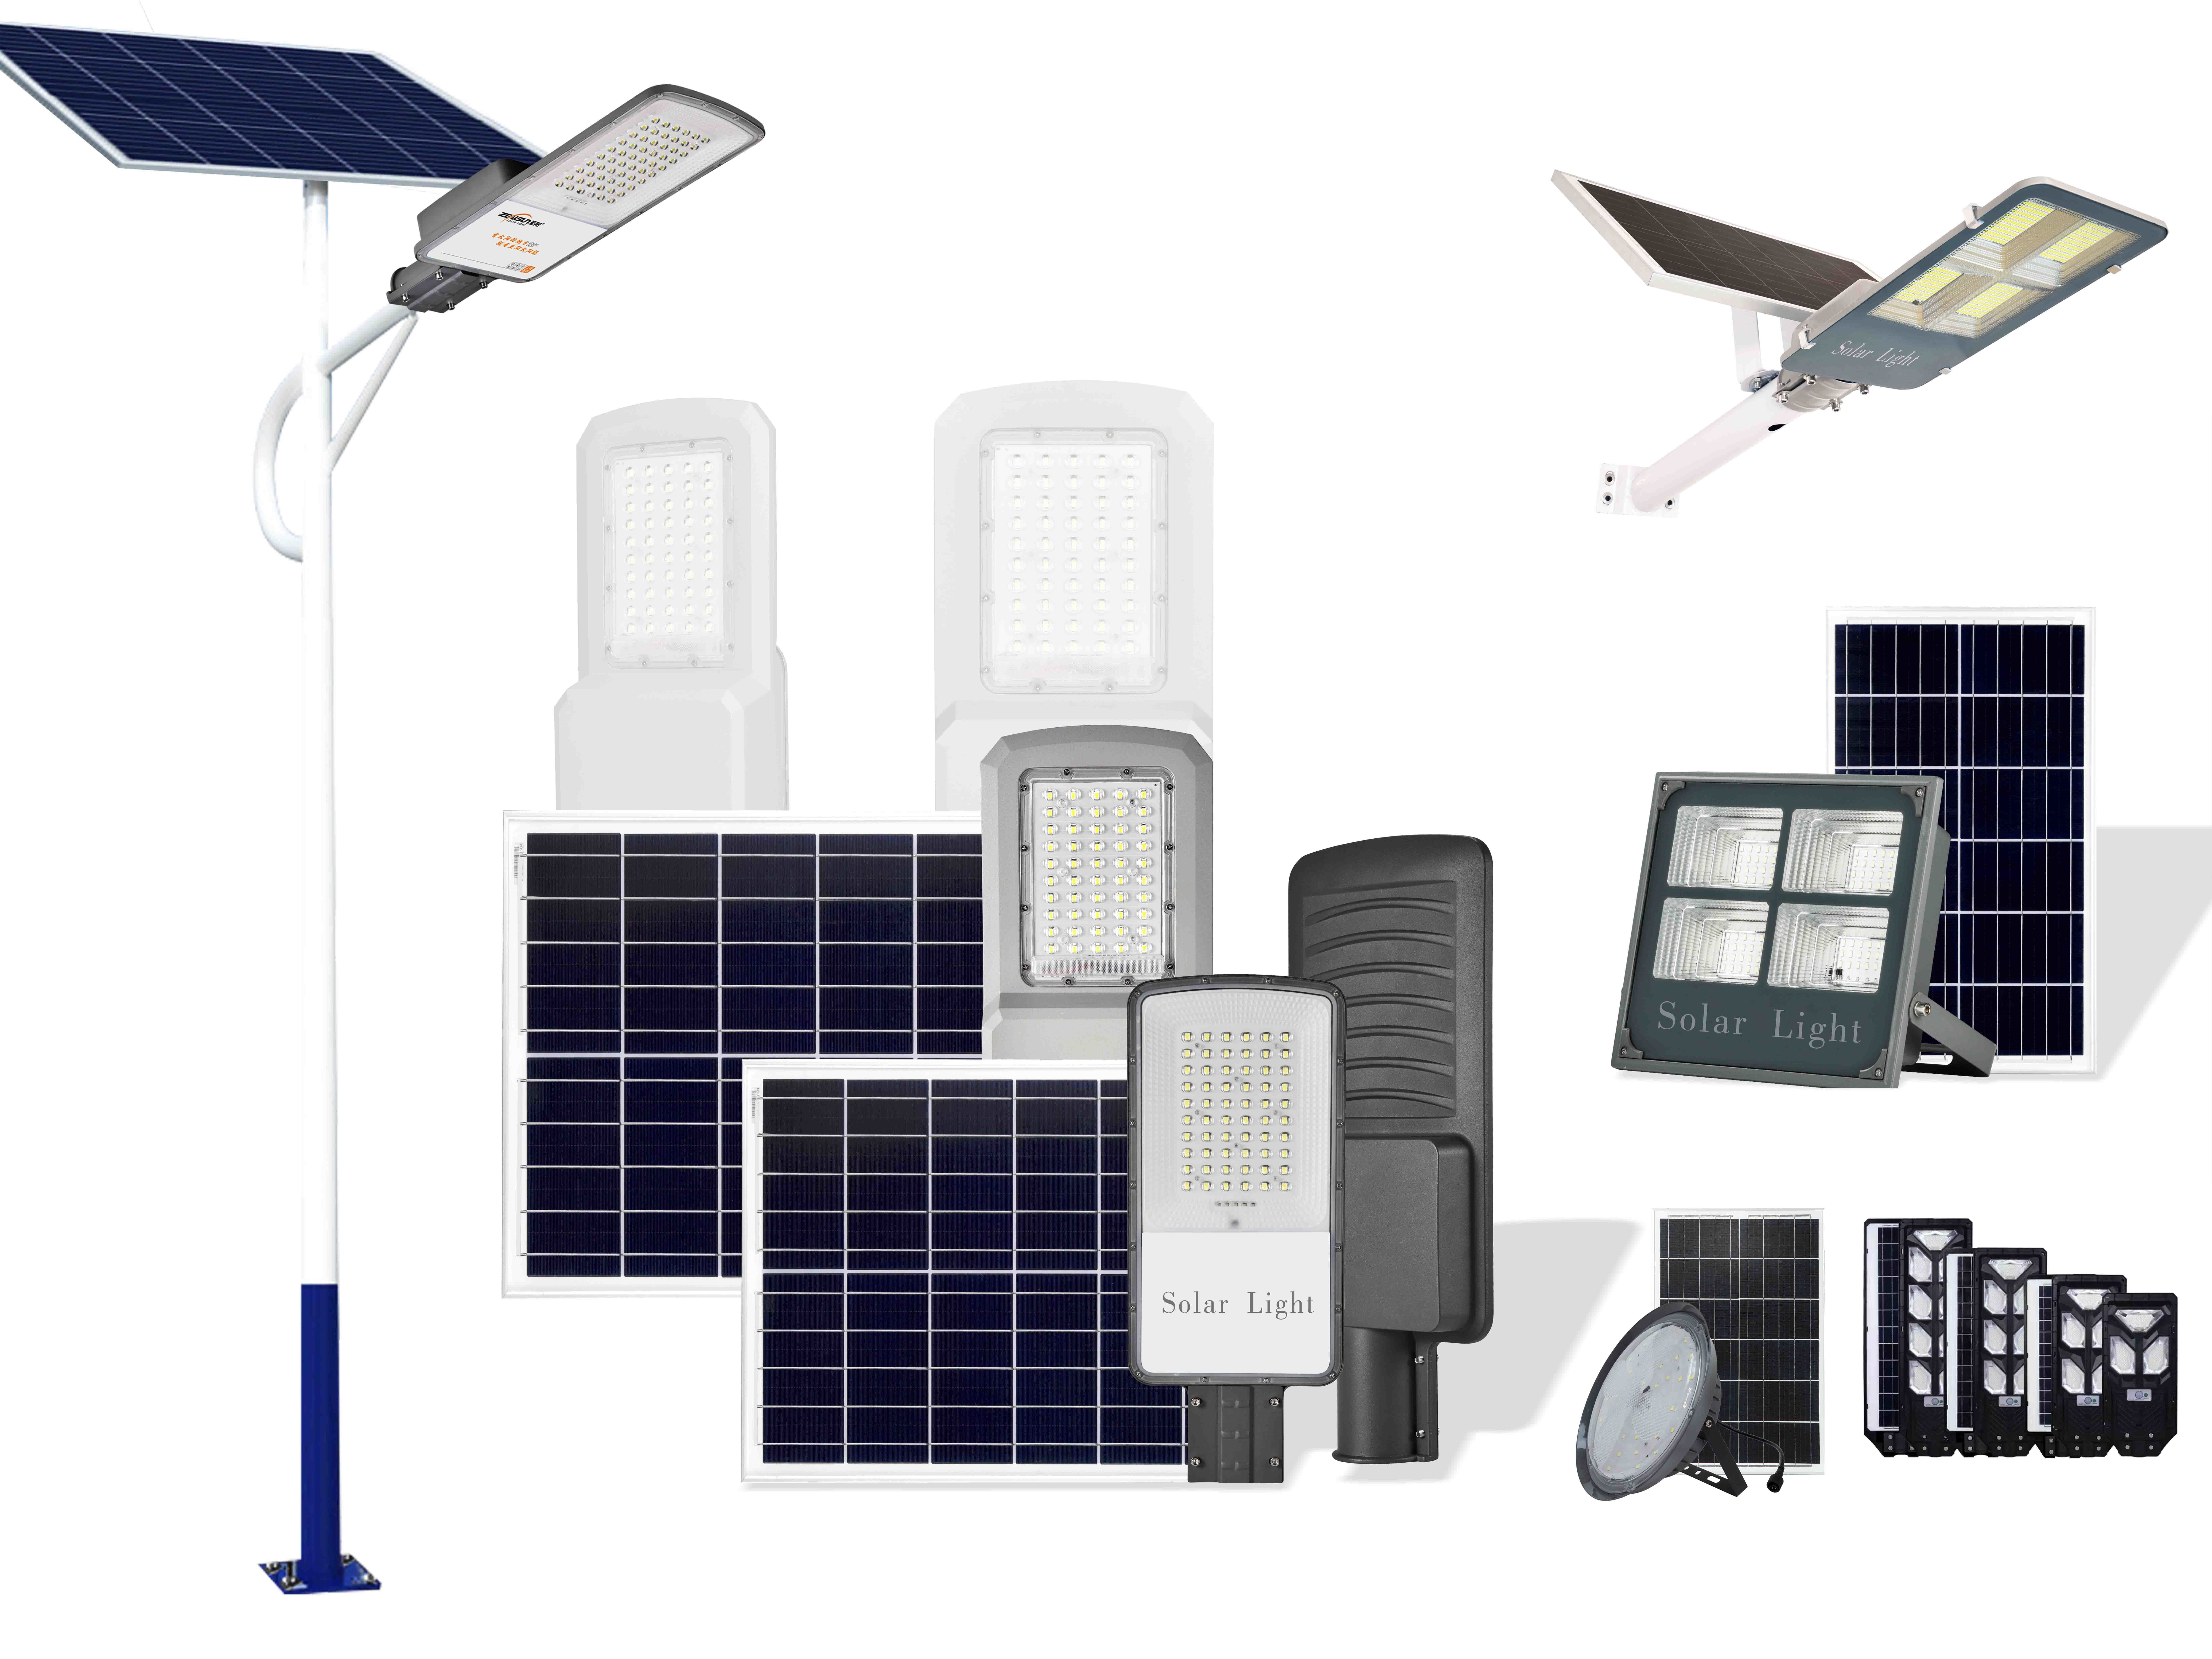 Solar lighting products